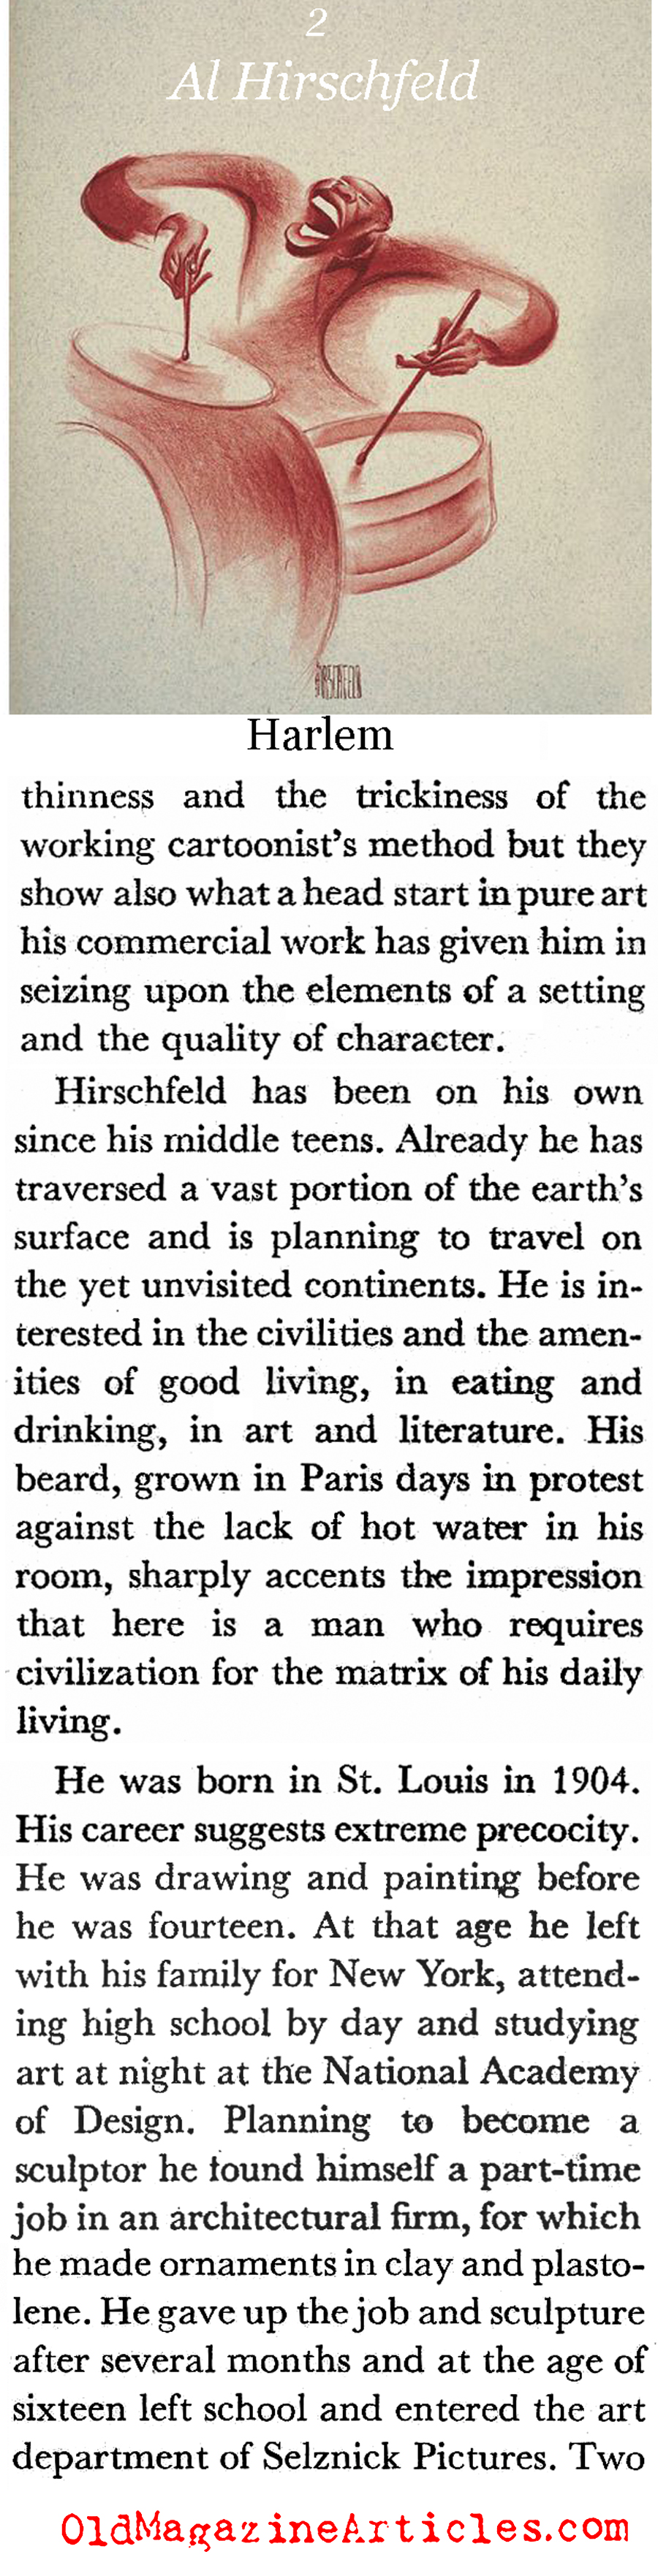 Caricaturist Al Hirschfeld (Coronet Magazine, 1939)